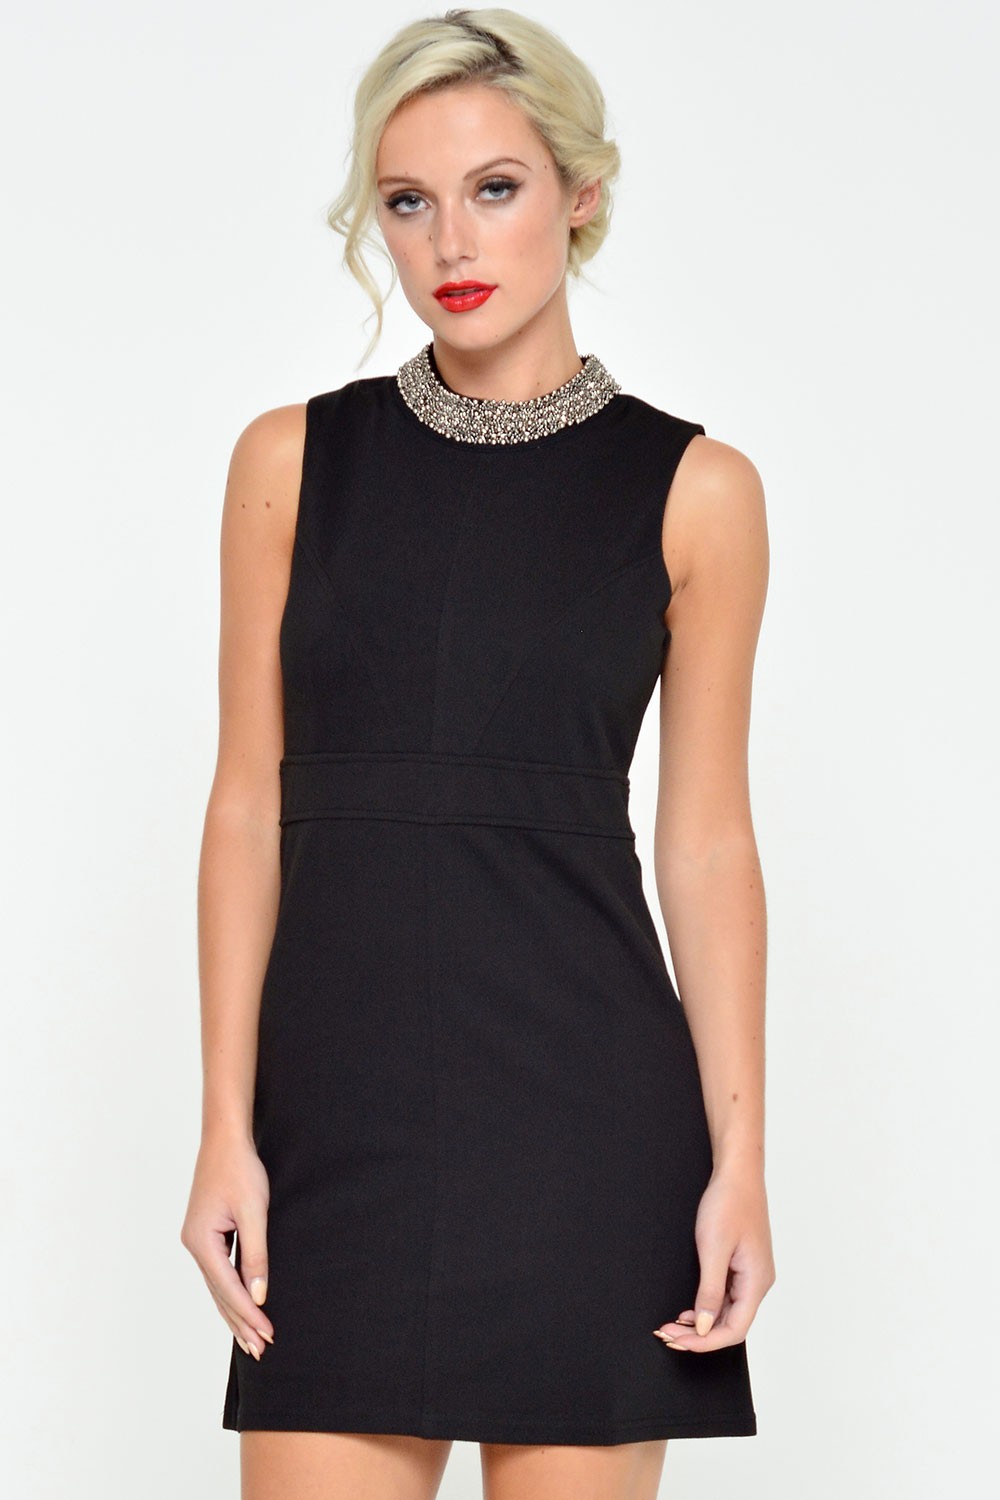 Stella Darby Embellished Dress in Black | iCLOTHING